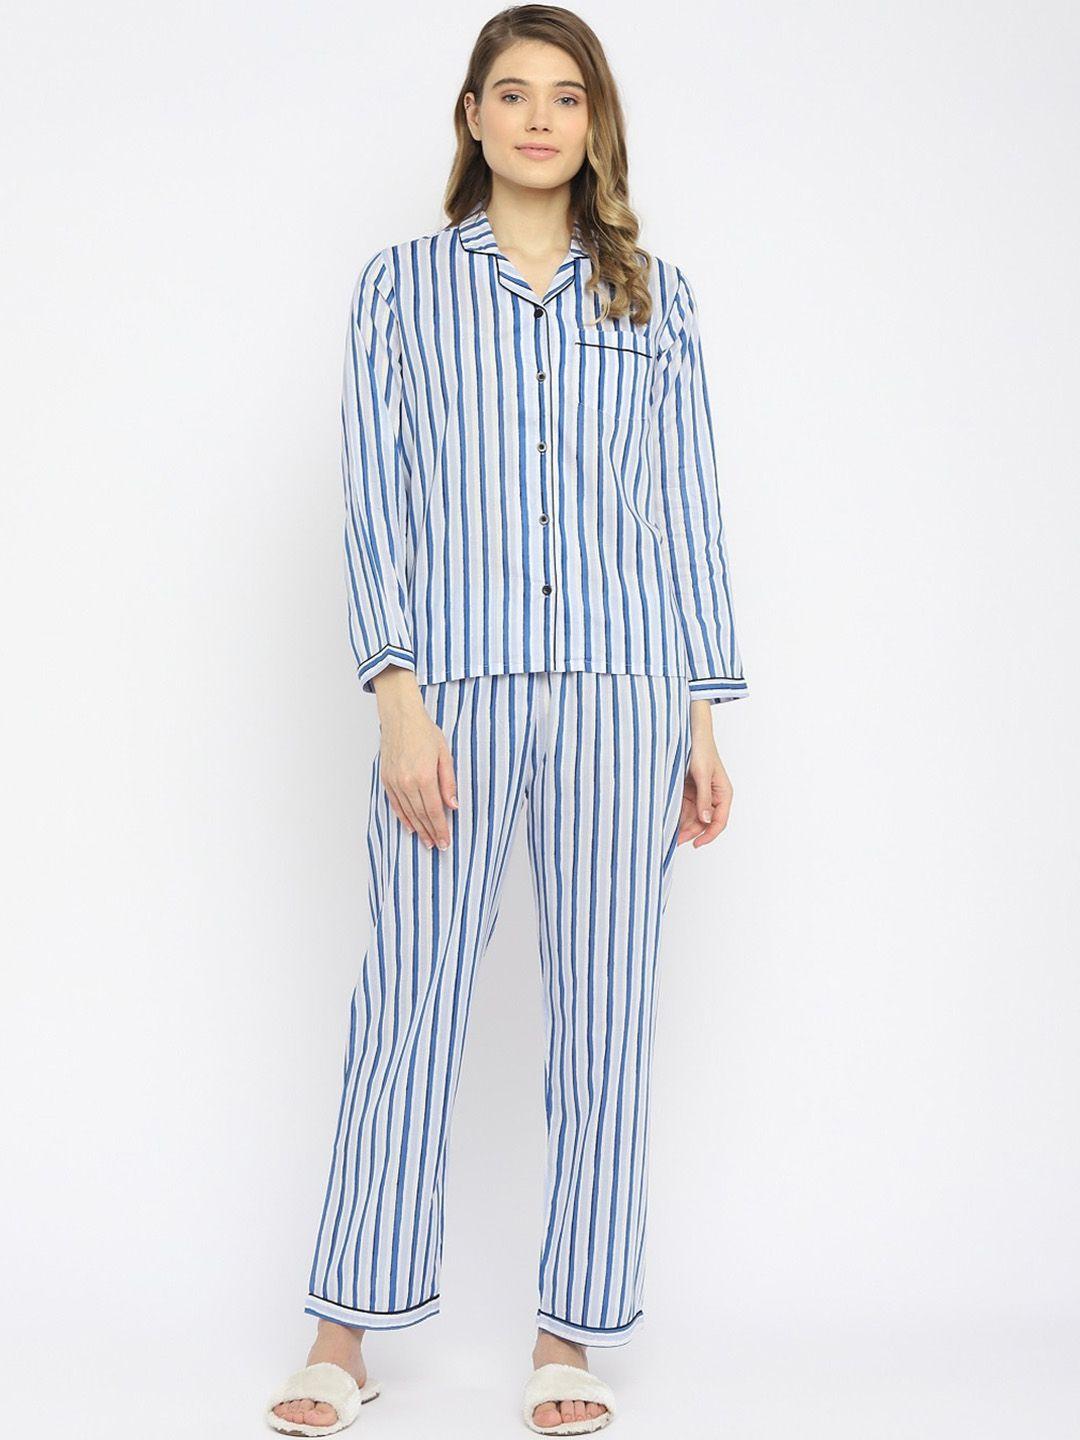 shopbloom women white & blue striped pure cotton night suit